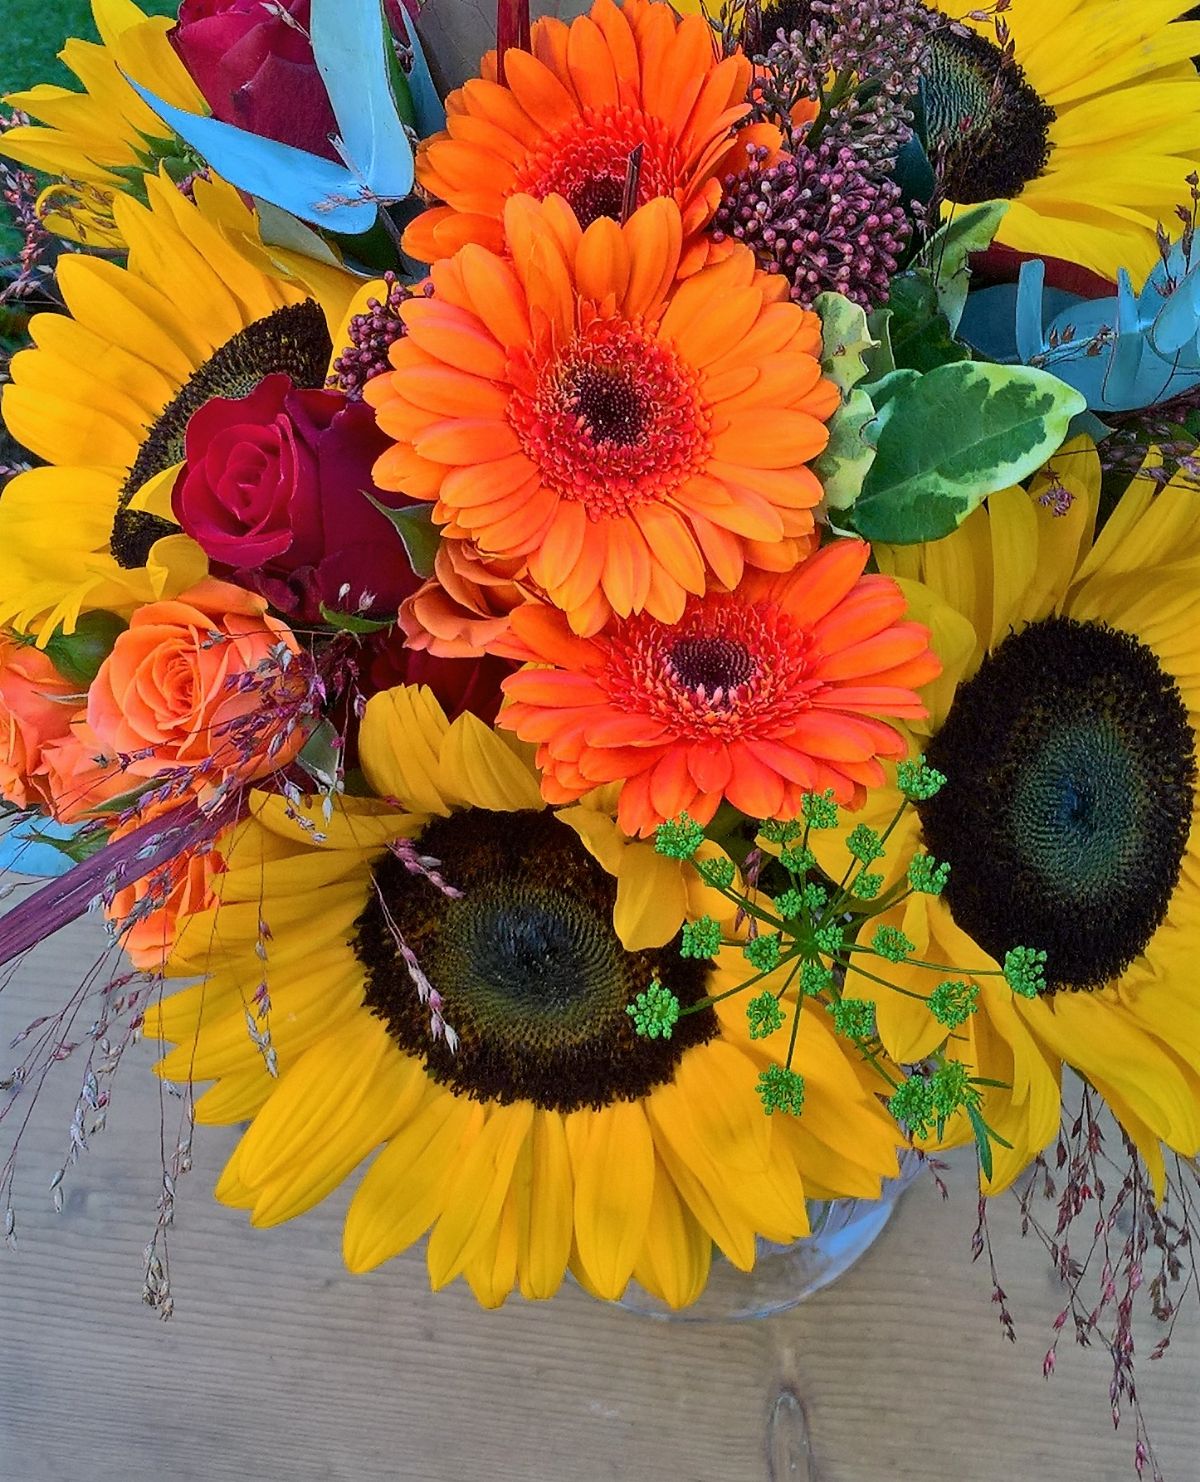 Sunflowers and bright orange gerberas